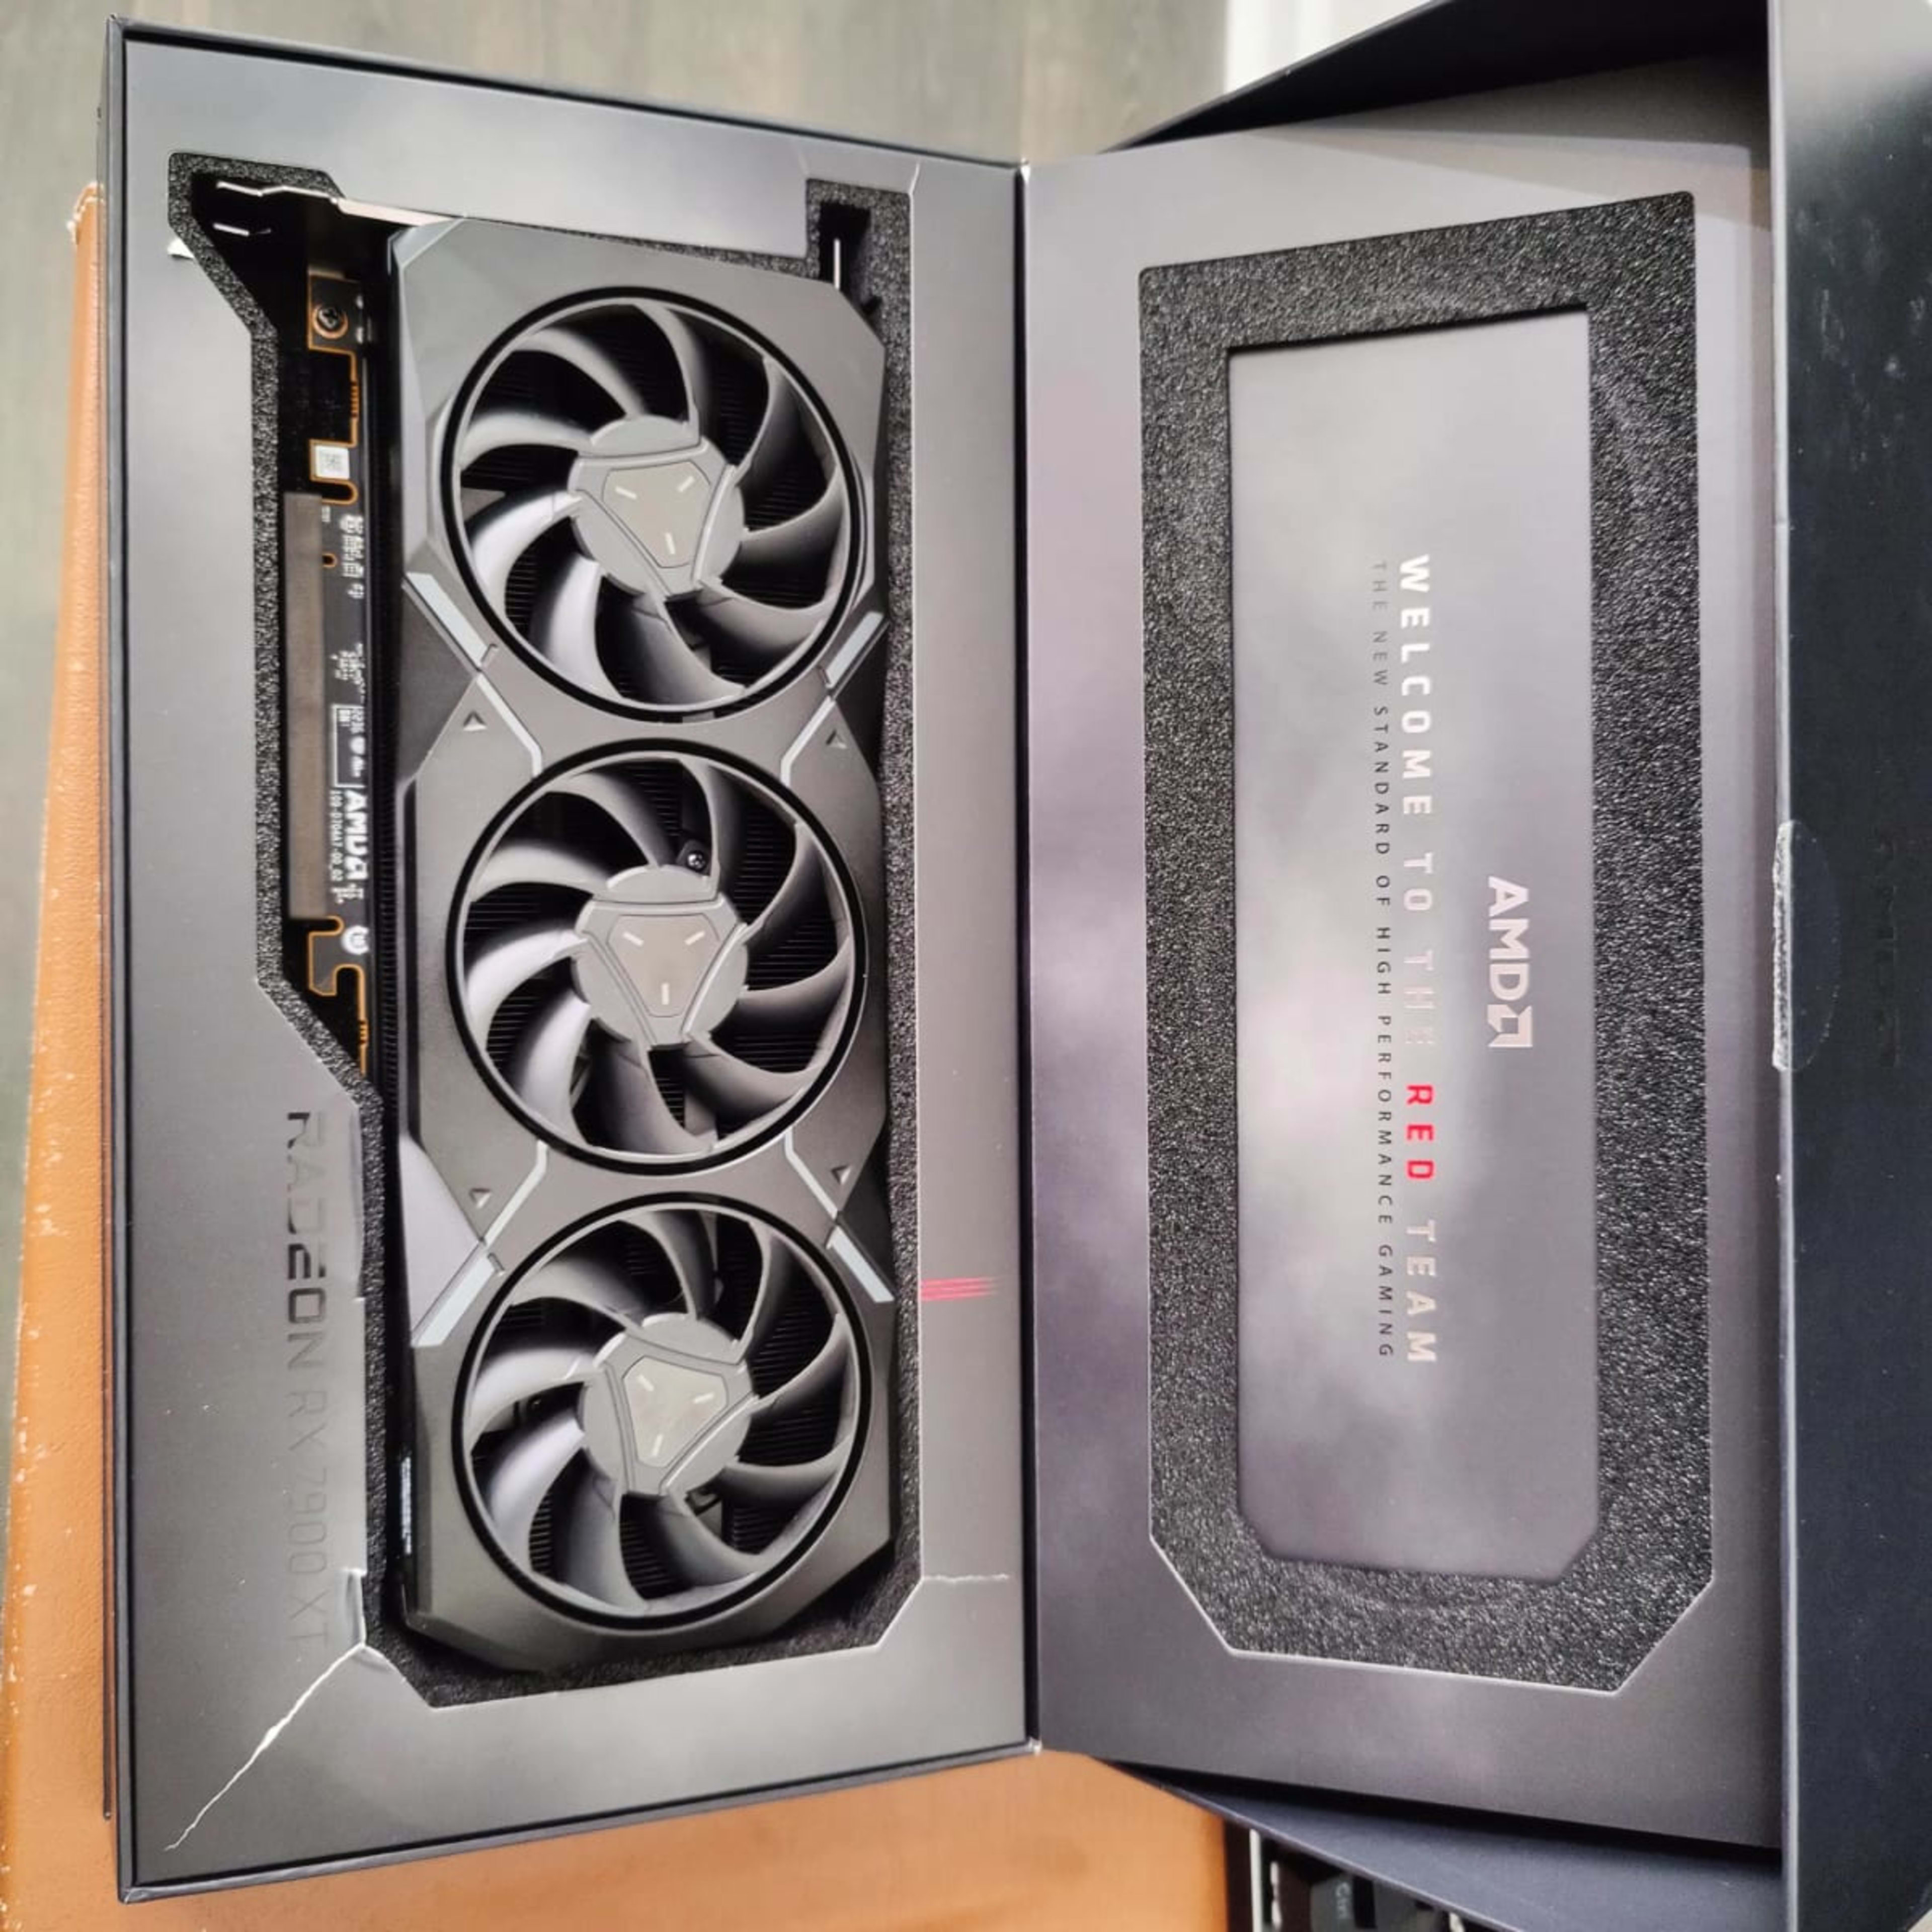 AMD Radeon 7900xt